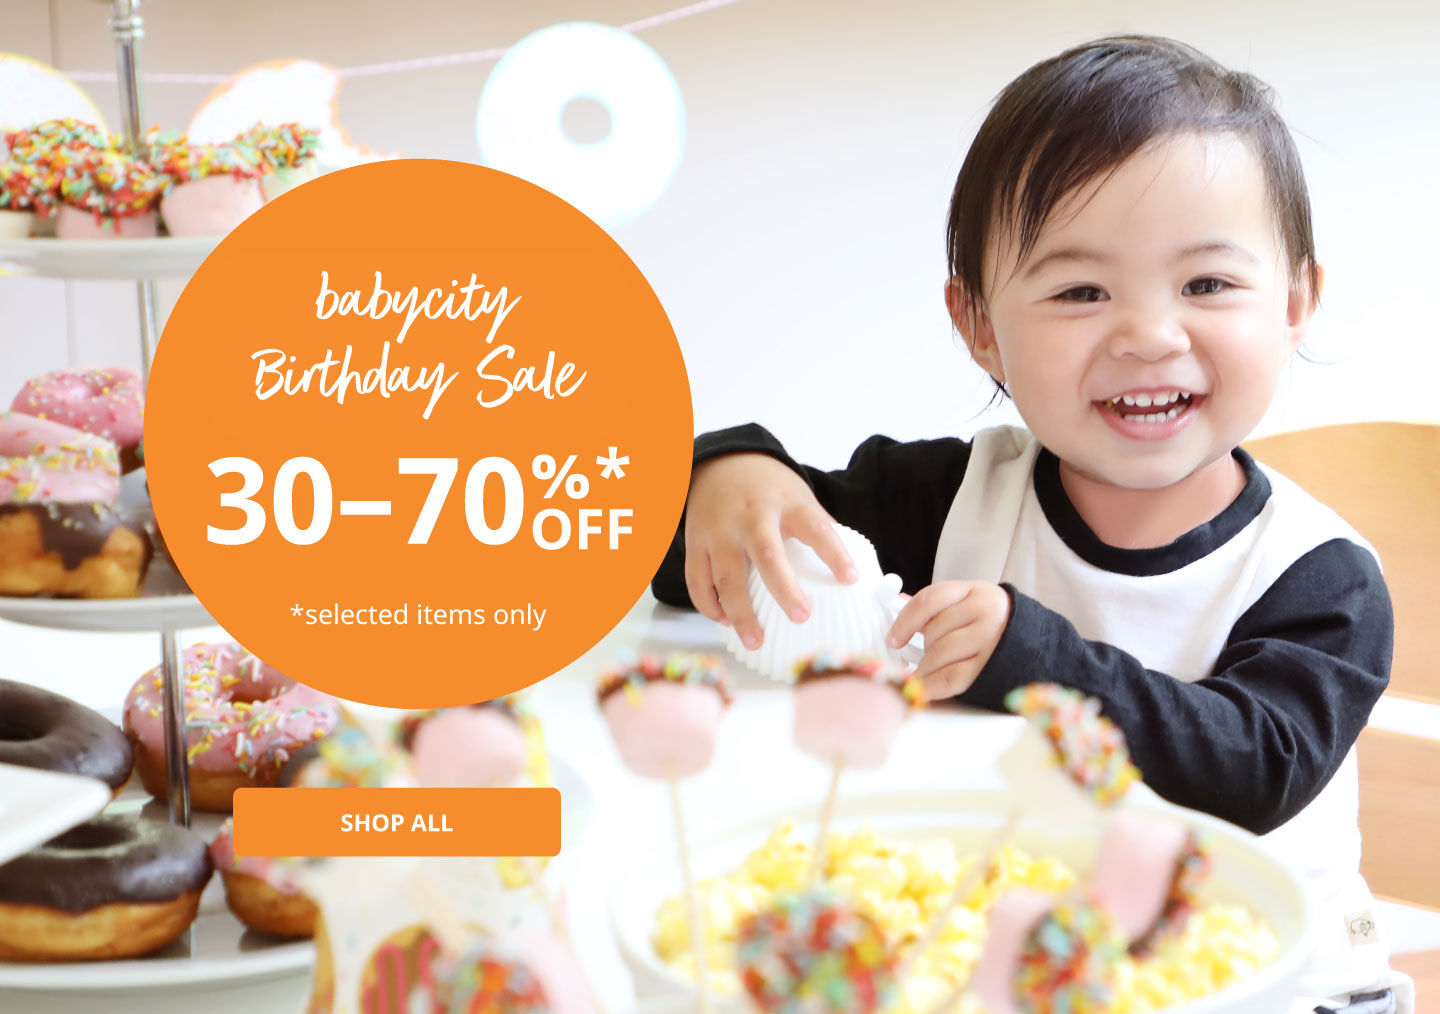 babycity Birthday Sale: 30-70% OFF